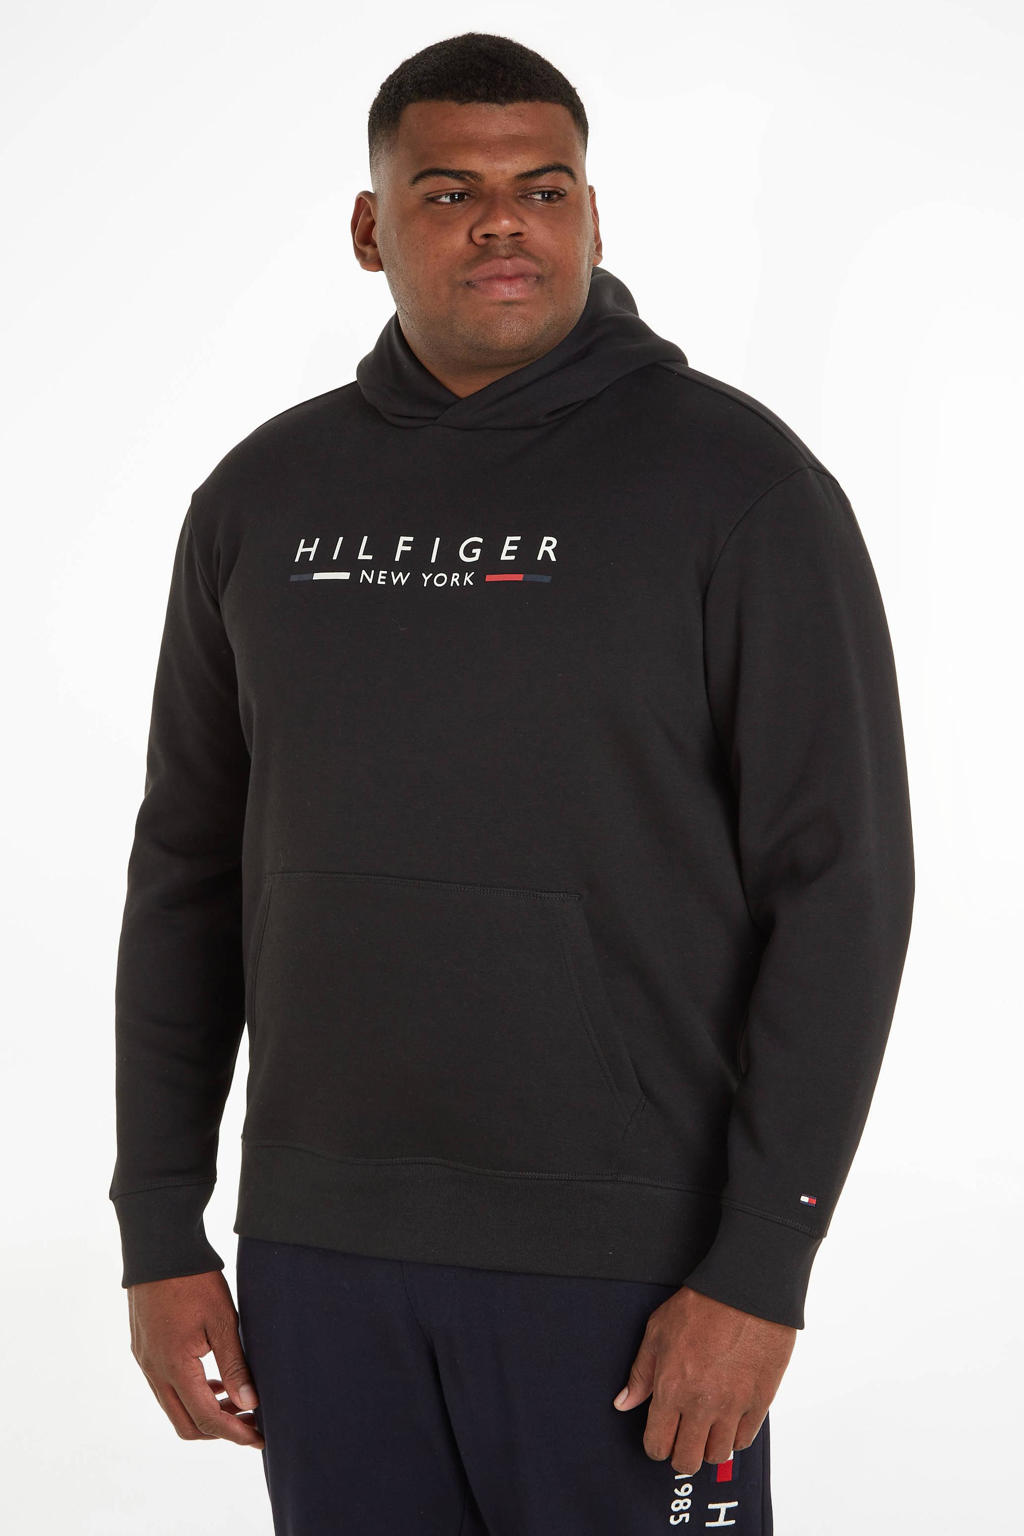 Tommy Hilfiger Big & Tall hoodie Plus Size met biologisch katoen bds black